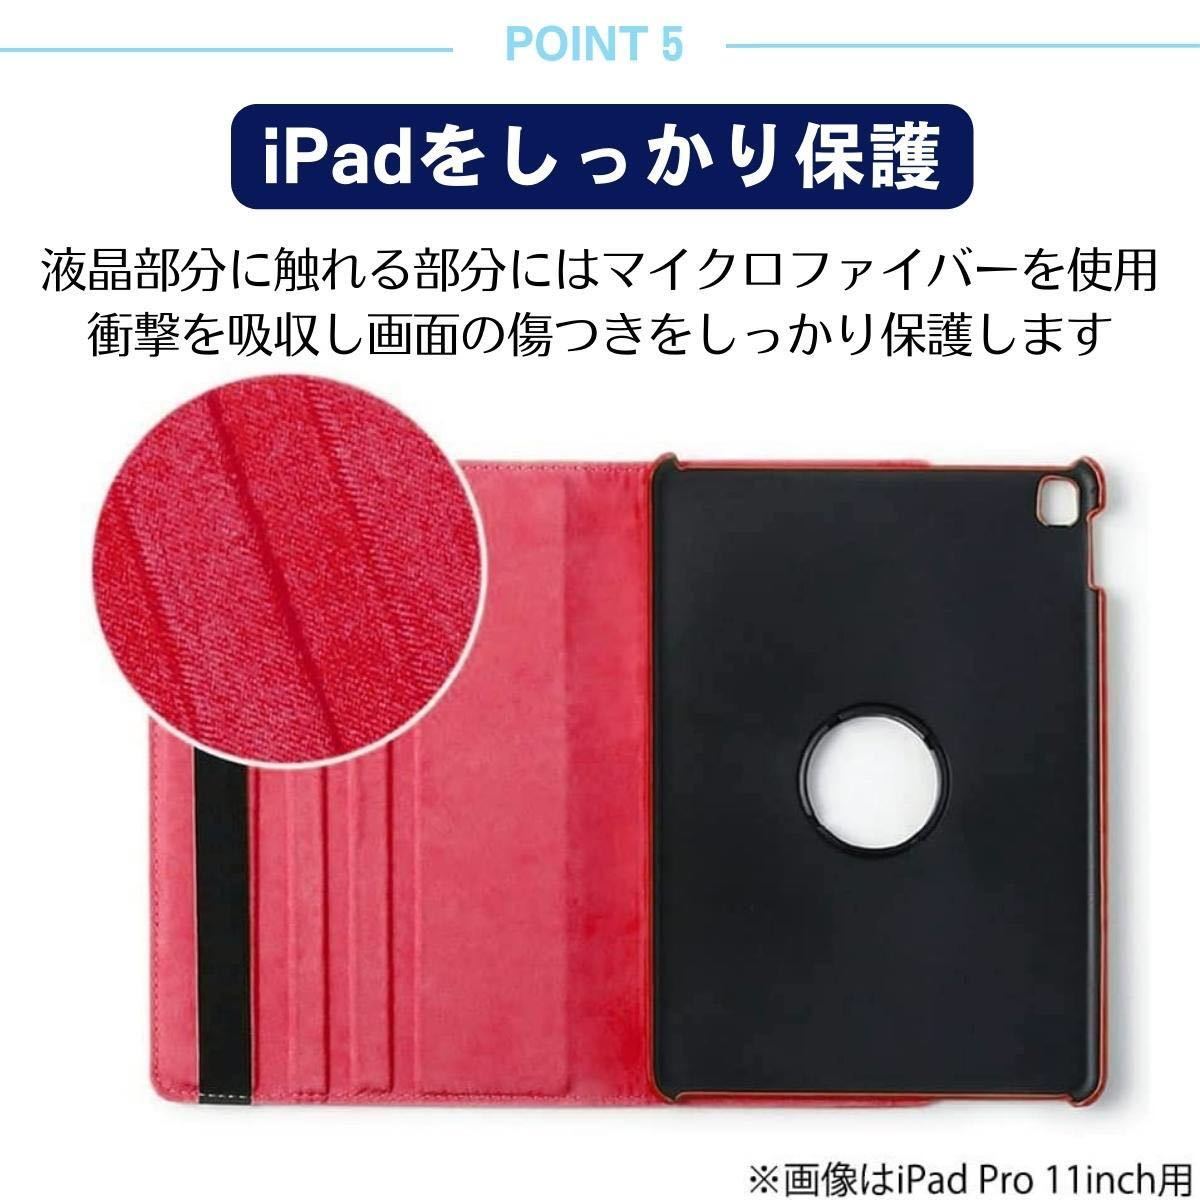 iPad ケース 7.9インチ mini4 mini5 手帳型 カバー アイパッド 耐衝撃 強い 子供用 アイパッドケースの画像6